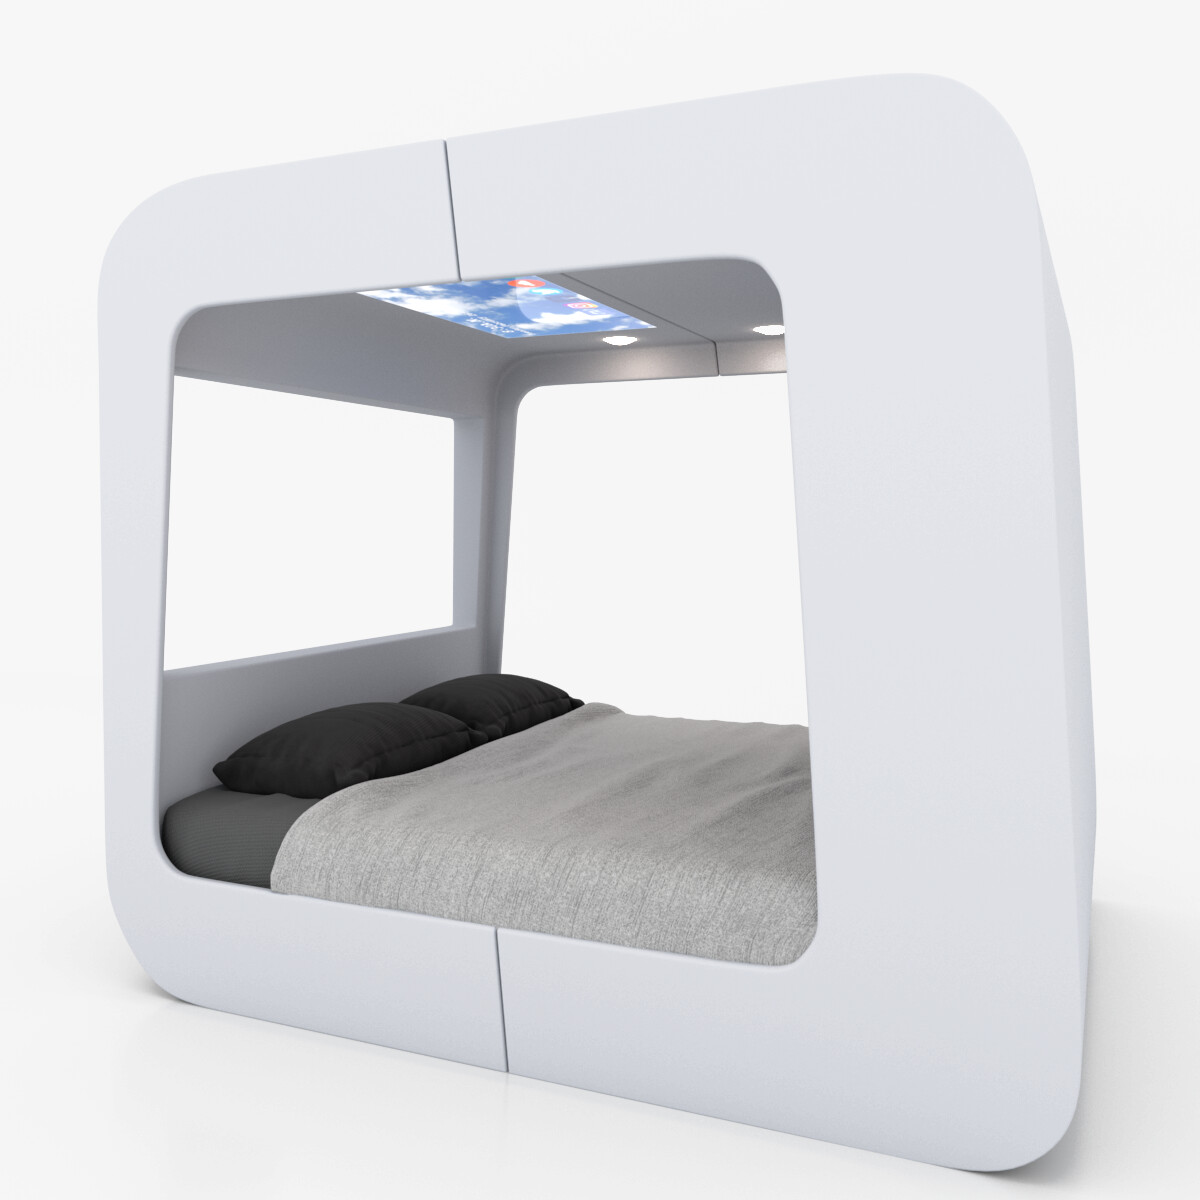 Jill Johnson Futuristic Bed, Futuristic Bunk Beds